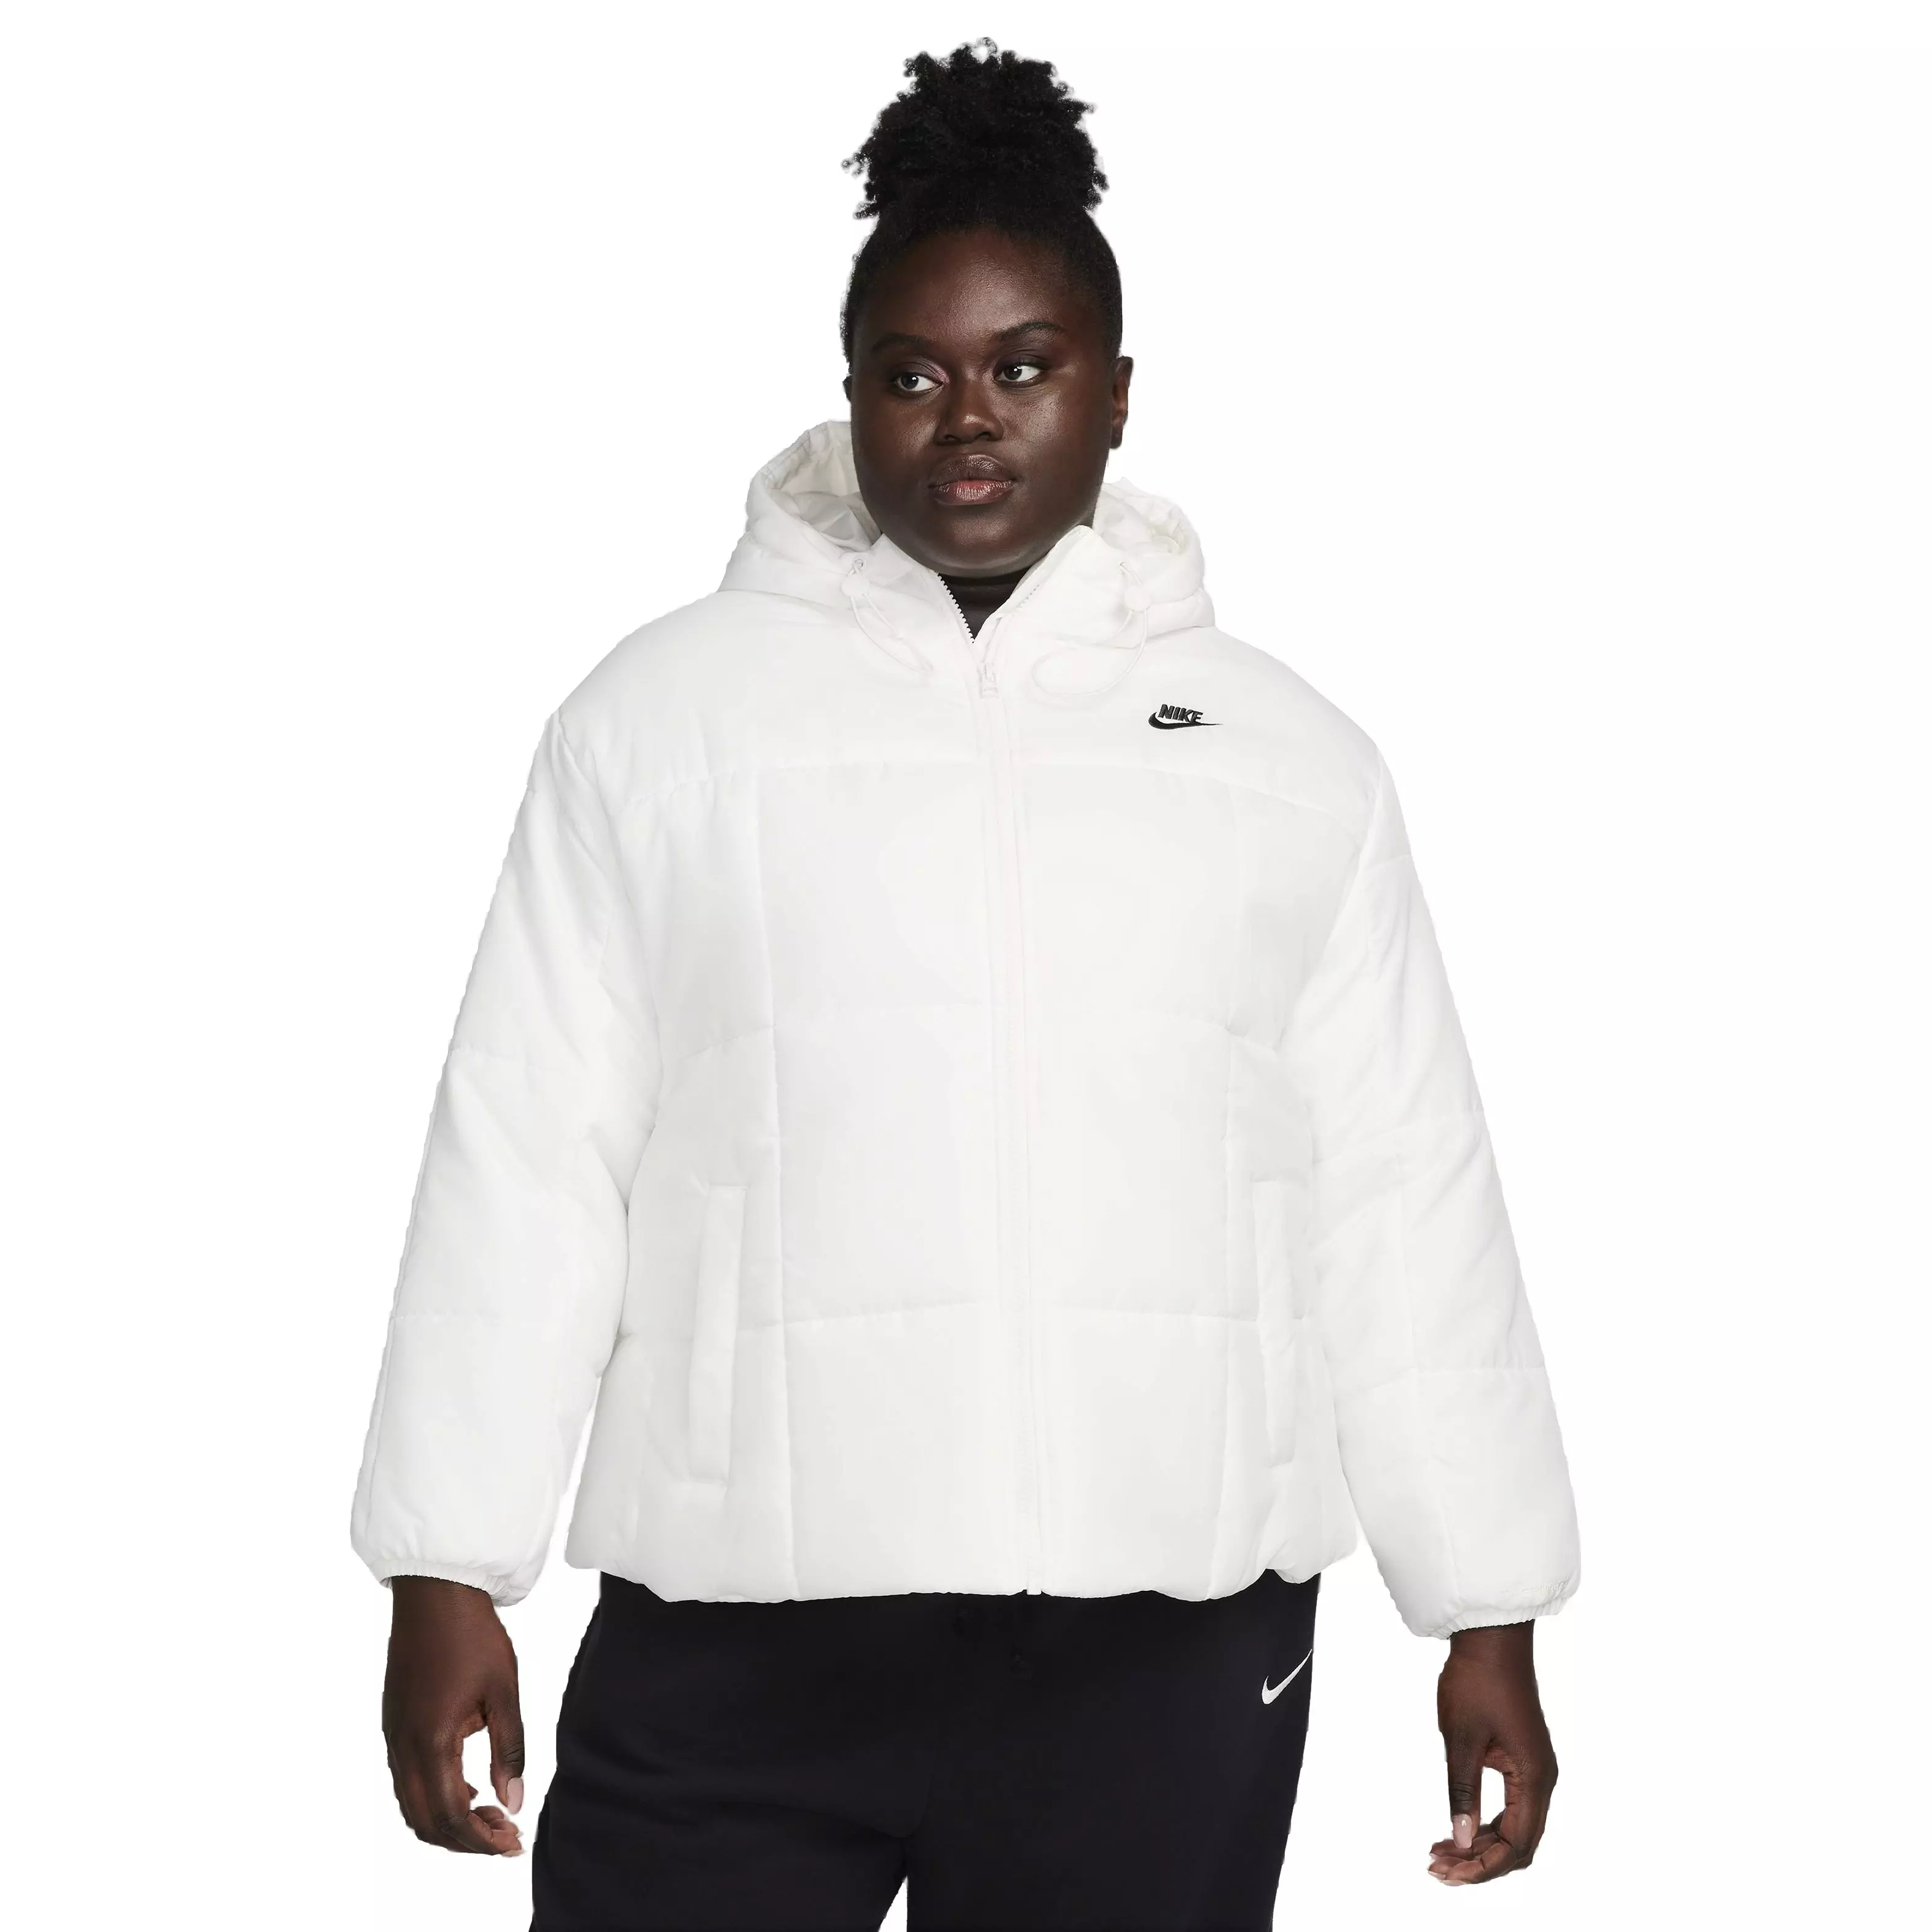 Women's Nike Sportswear Therma-FIT Essentials Puffer Jacket